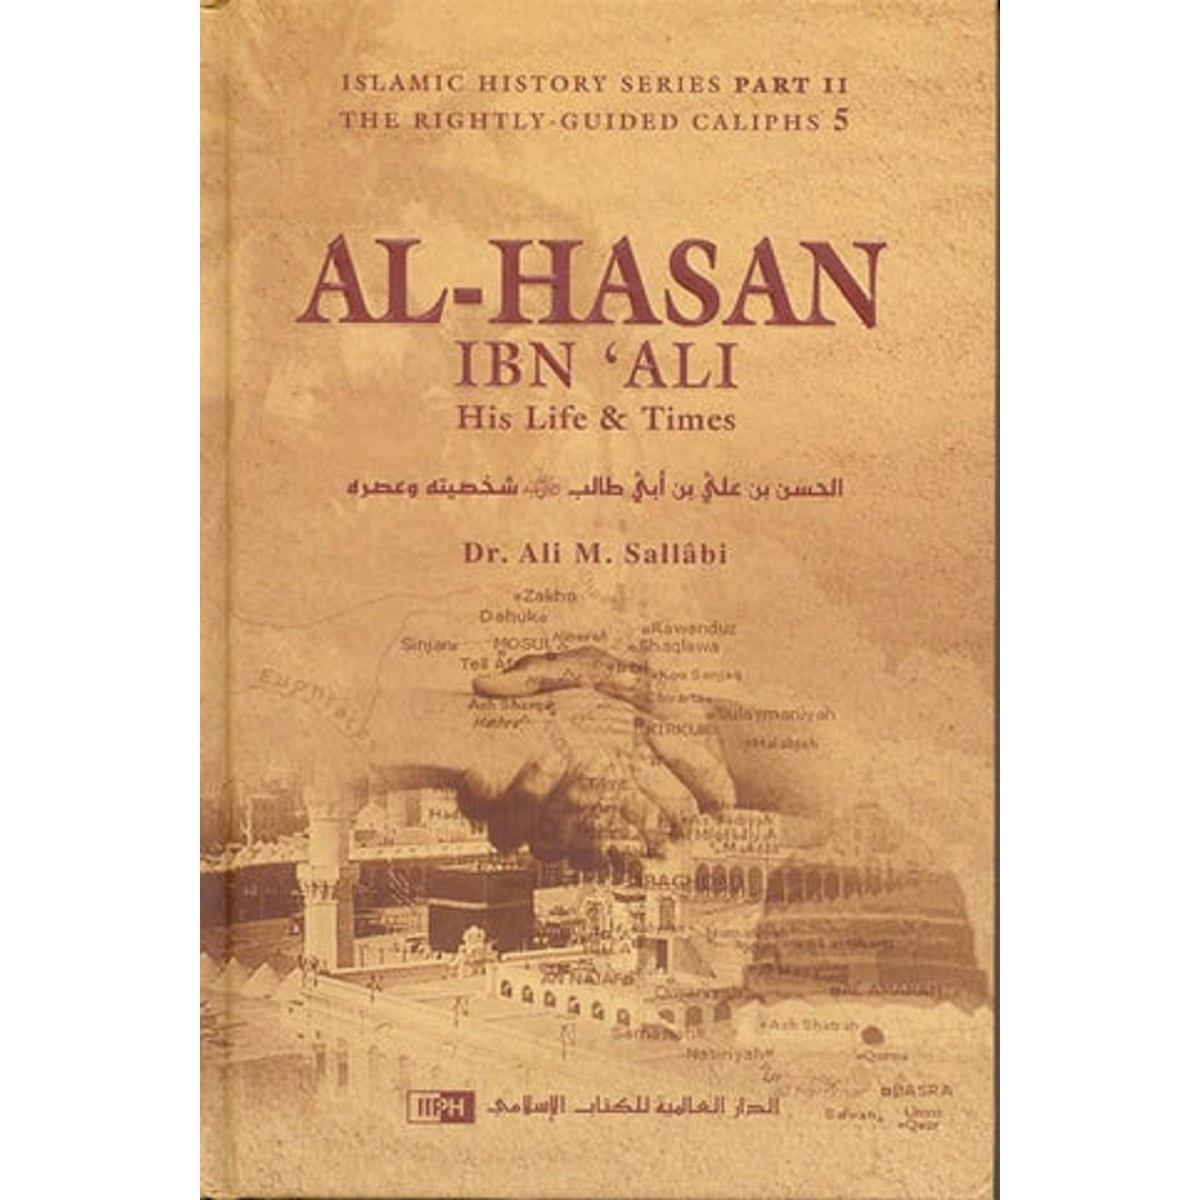 https://tarbiyahbooksplus.com/shop/islamic-history-and-civilization/al-hasan-ibn-ali-his-life-times/